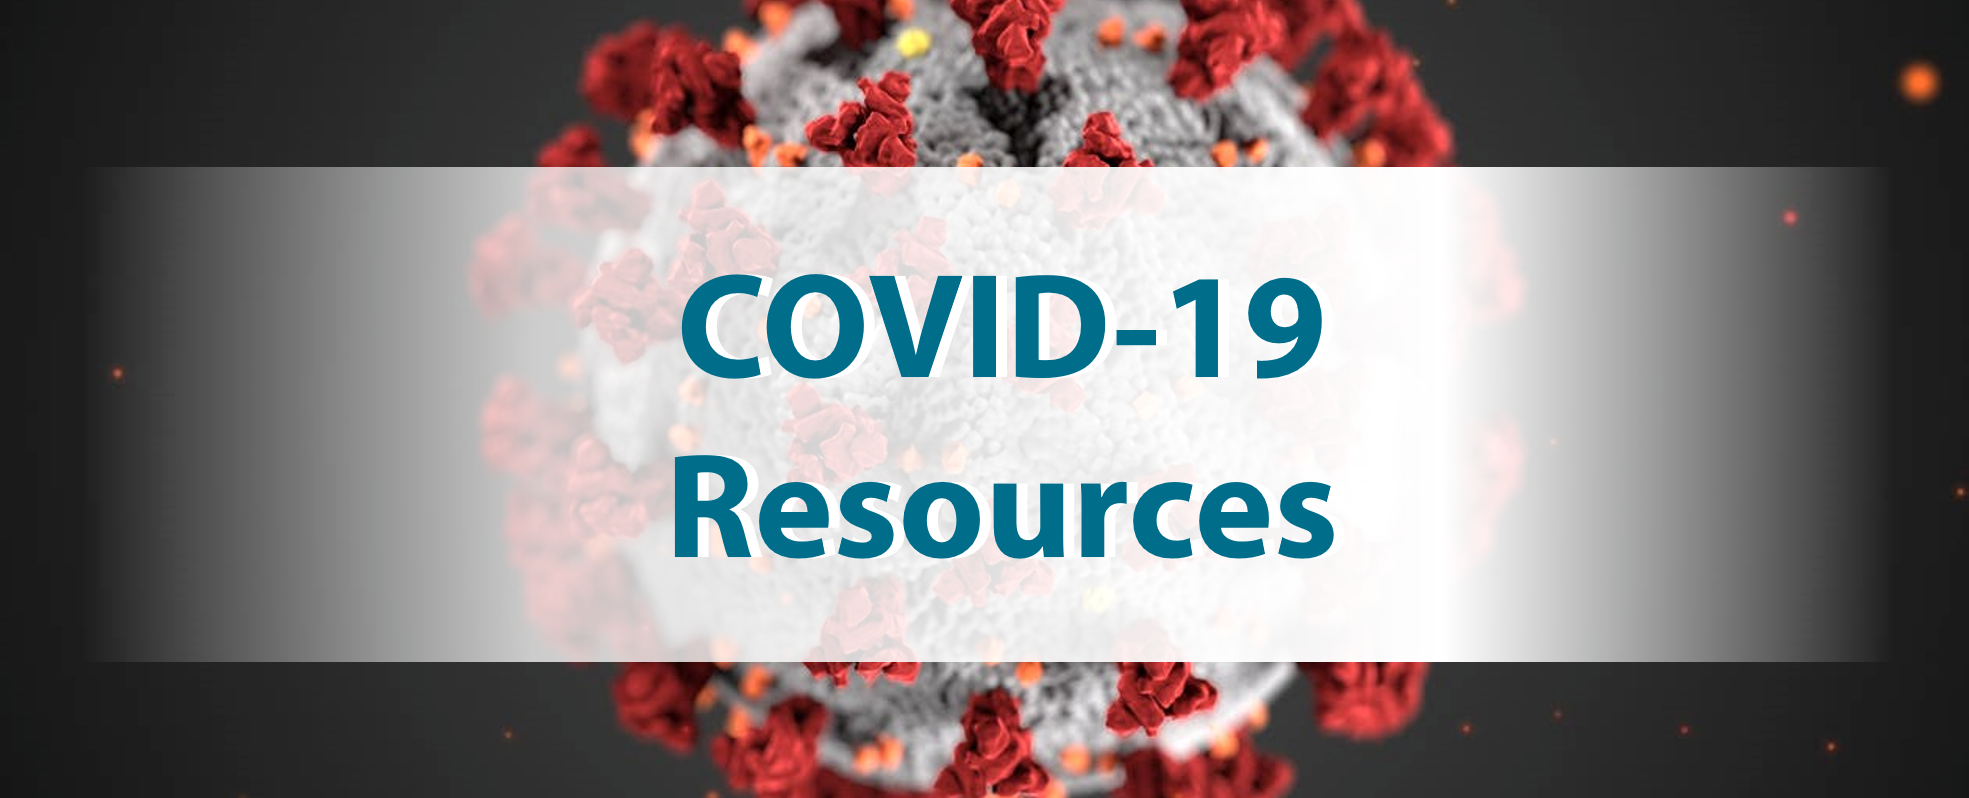 COVID-19 Resources